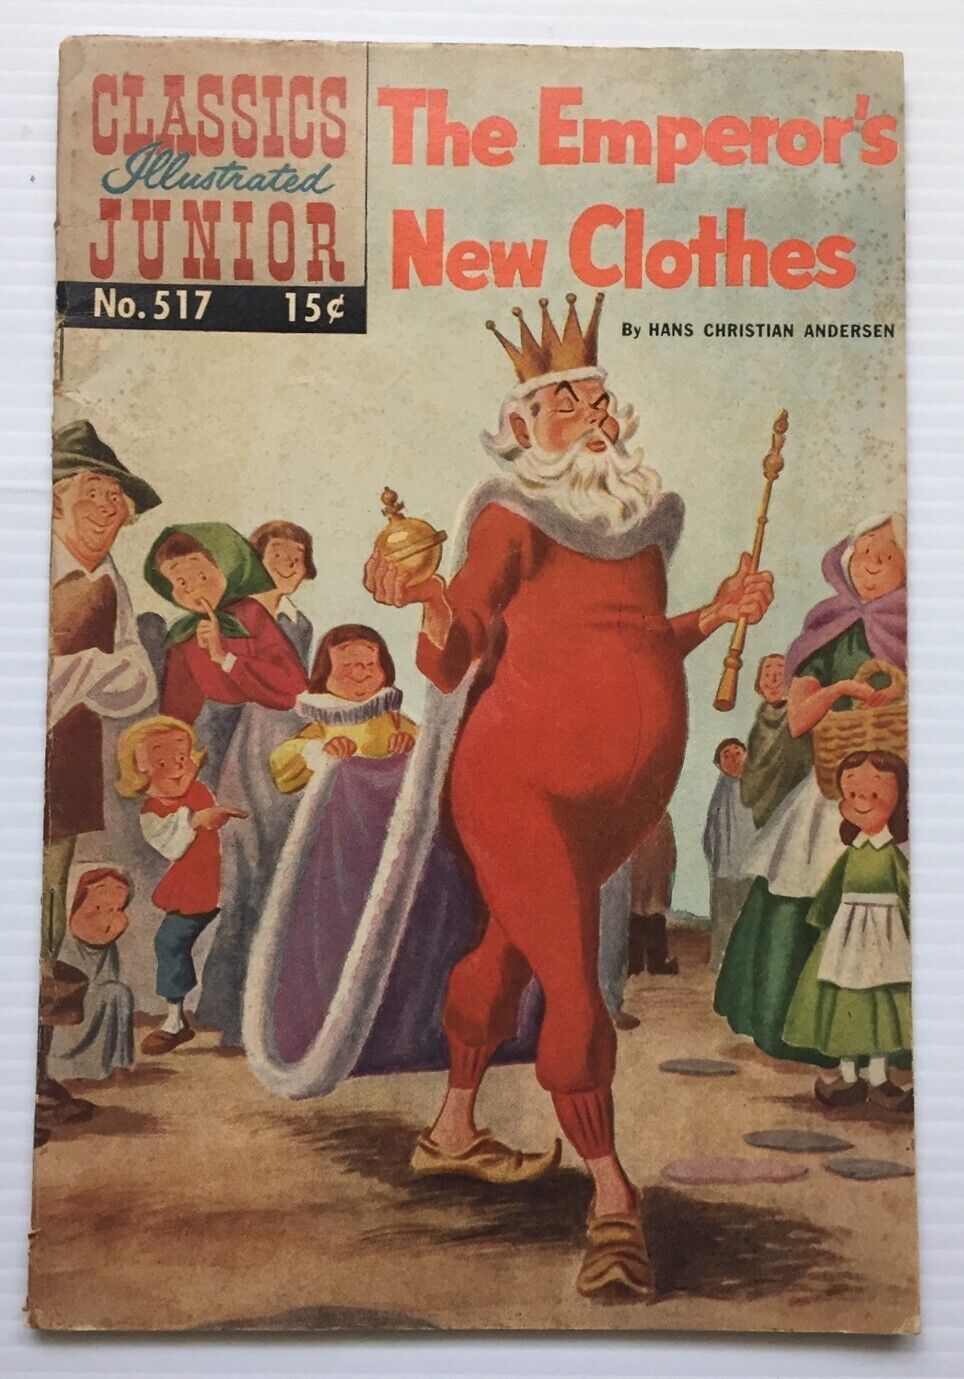 CLASSICS ILLUSTRATED (JUNIOR) #517 (1955) The Emperor's New Clothes